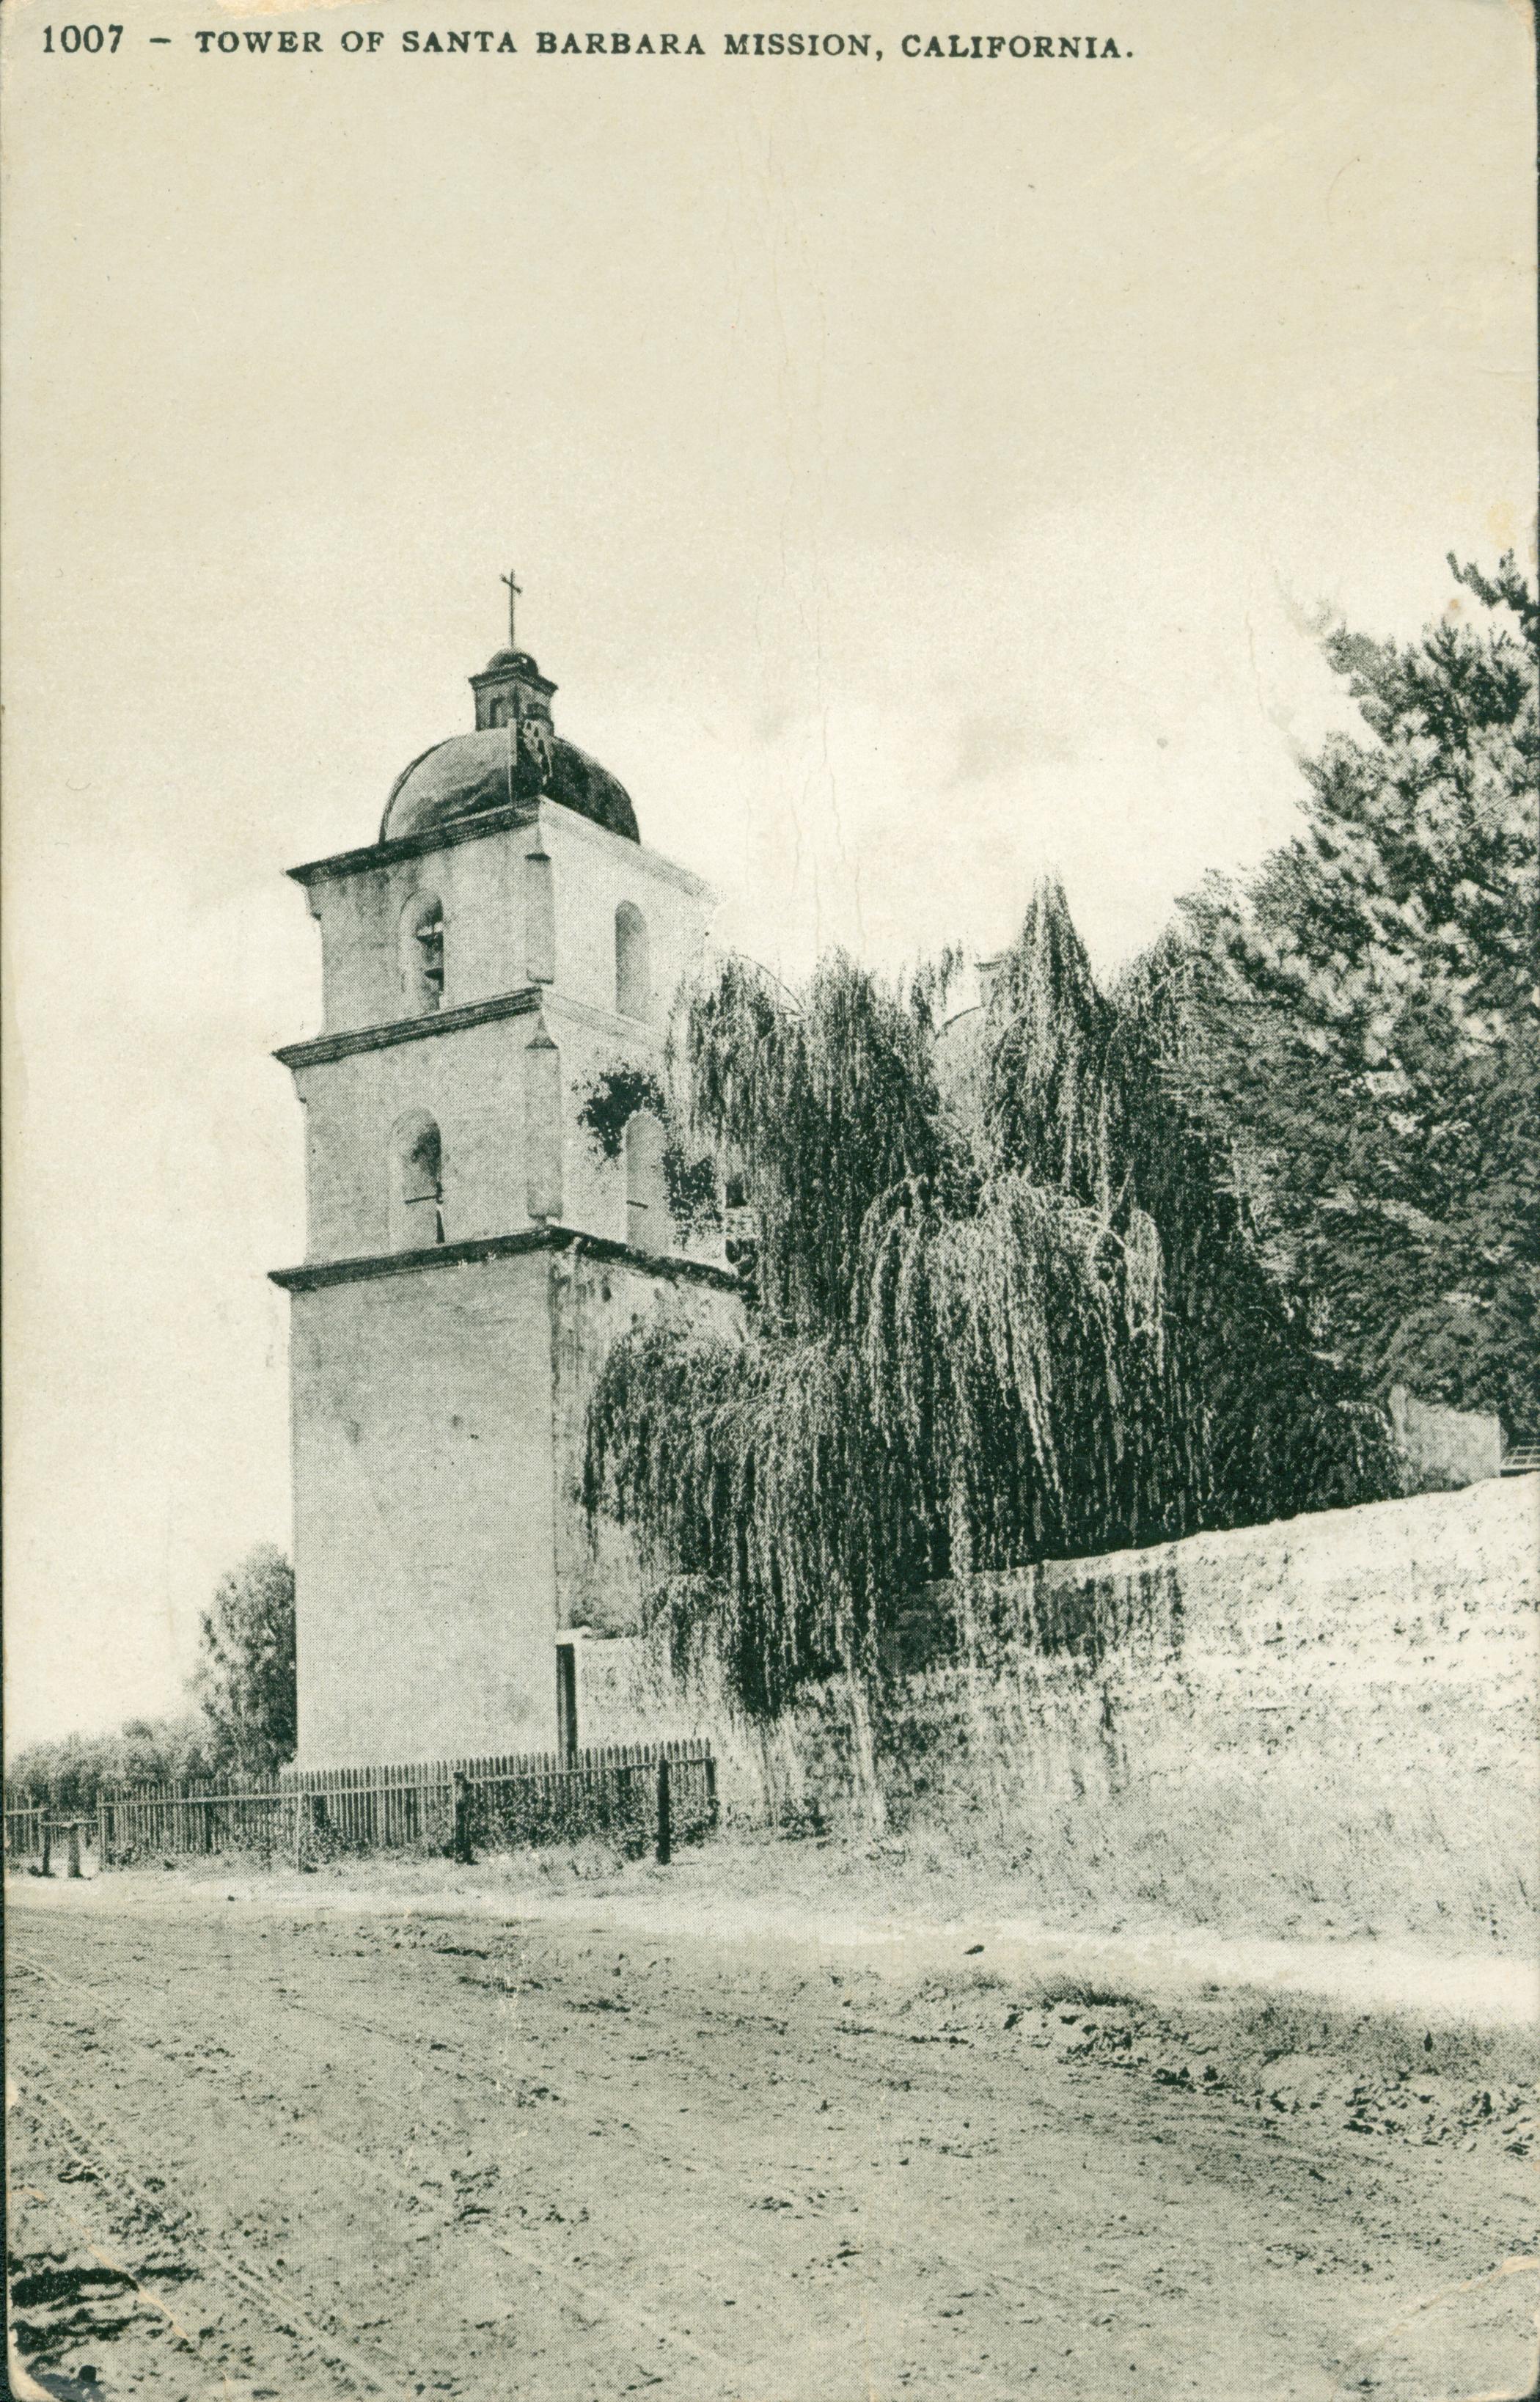 View of tower of Santa Barbara Mission, California